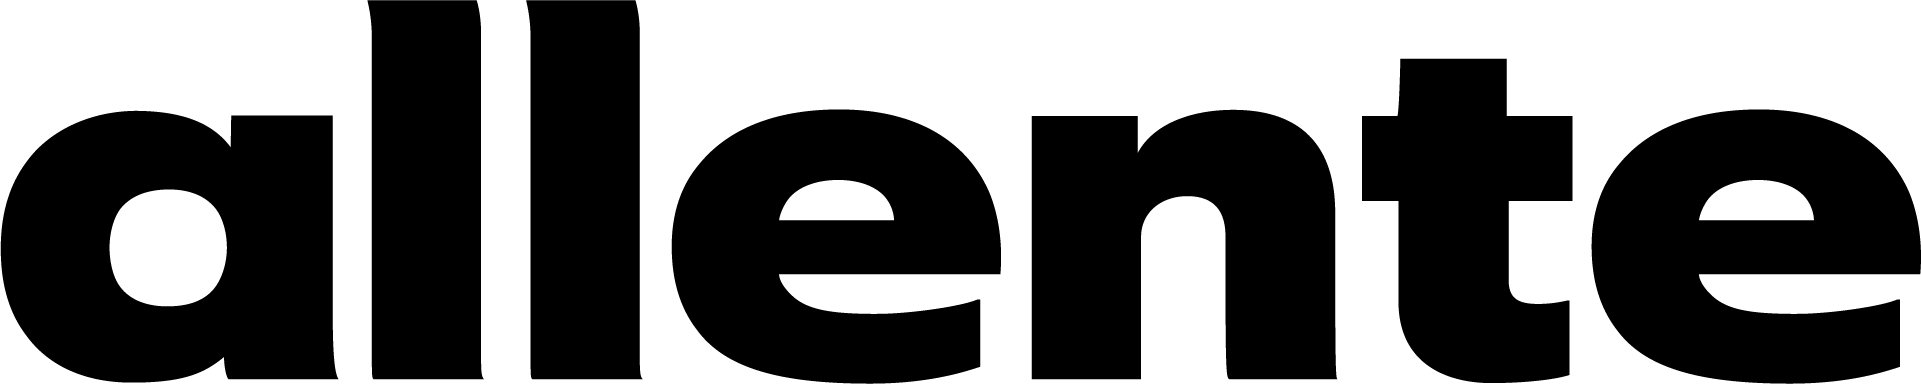 Canaldigital logo